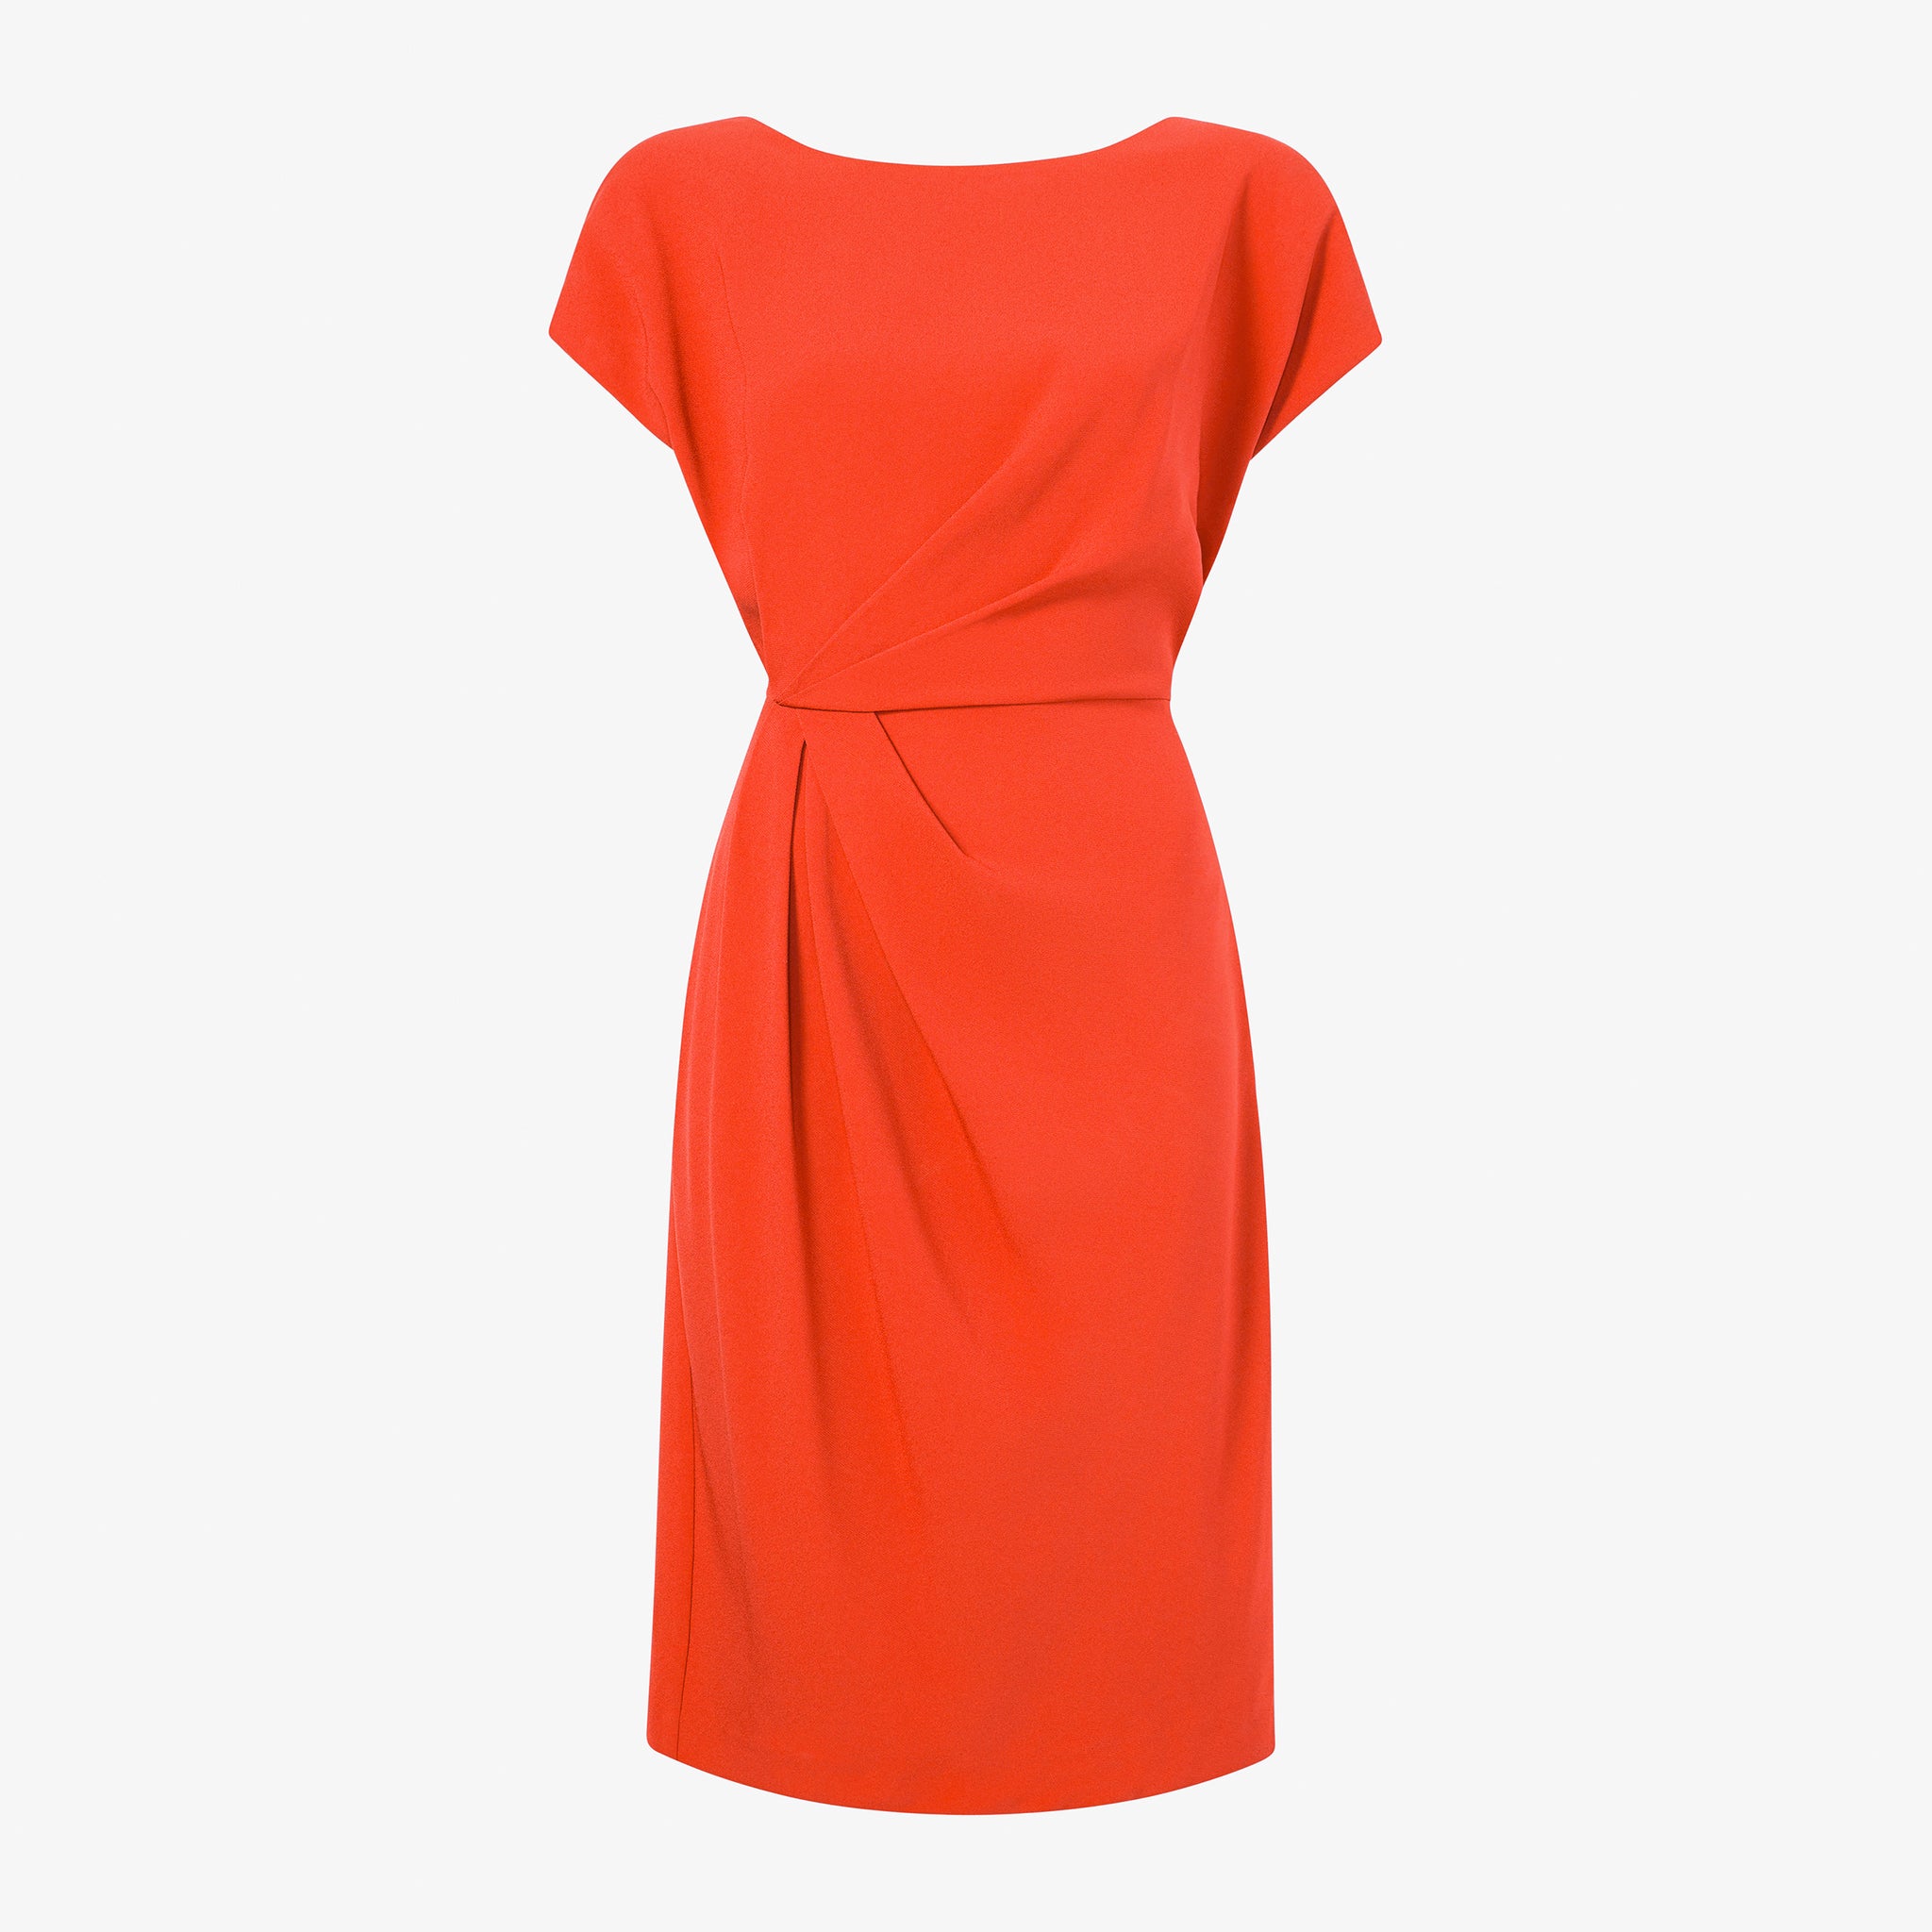 packshot image of the jillian dress in bright coral